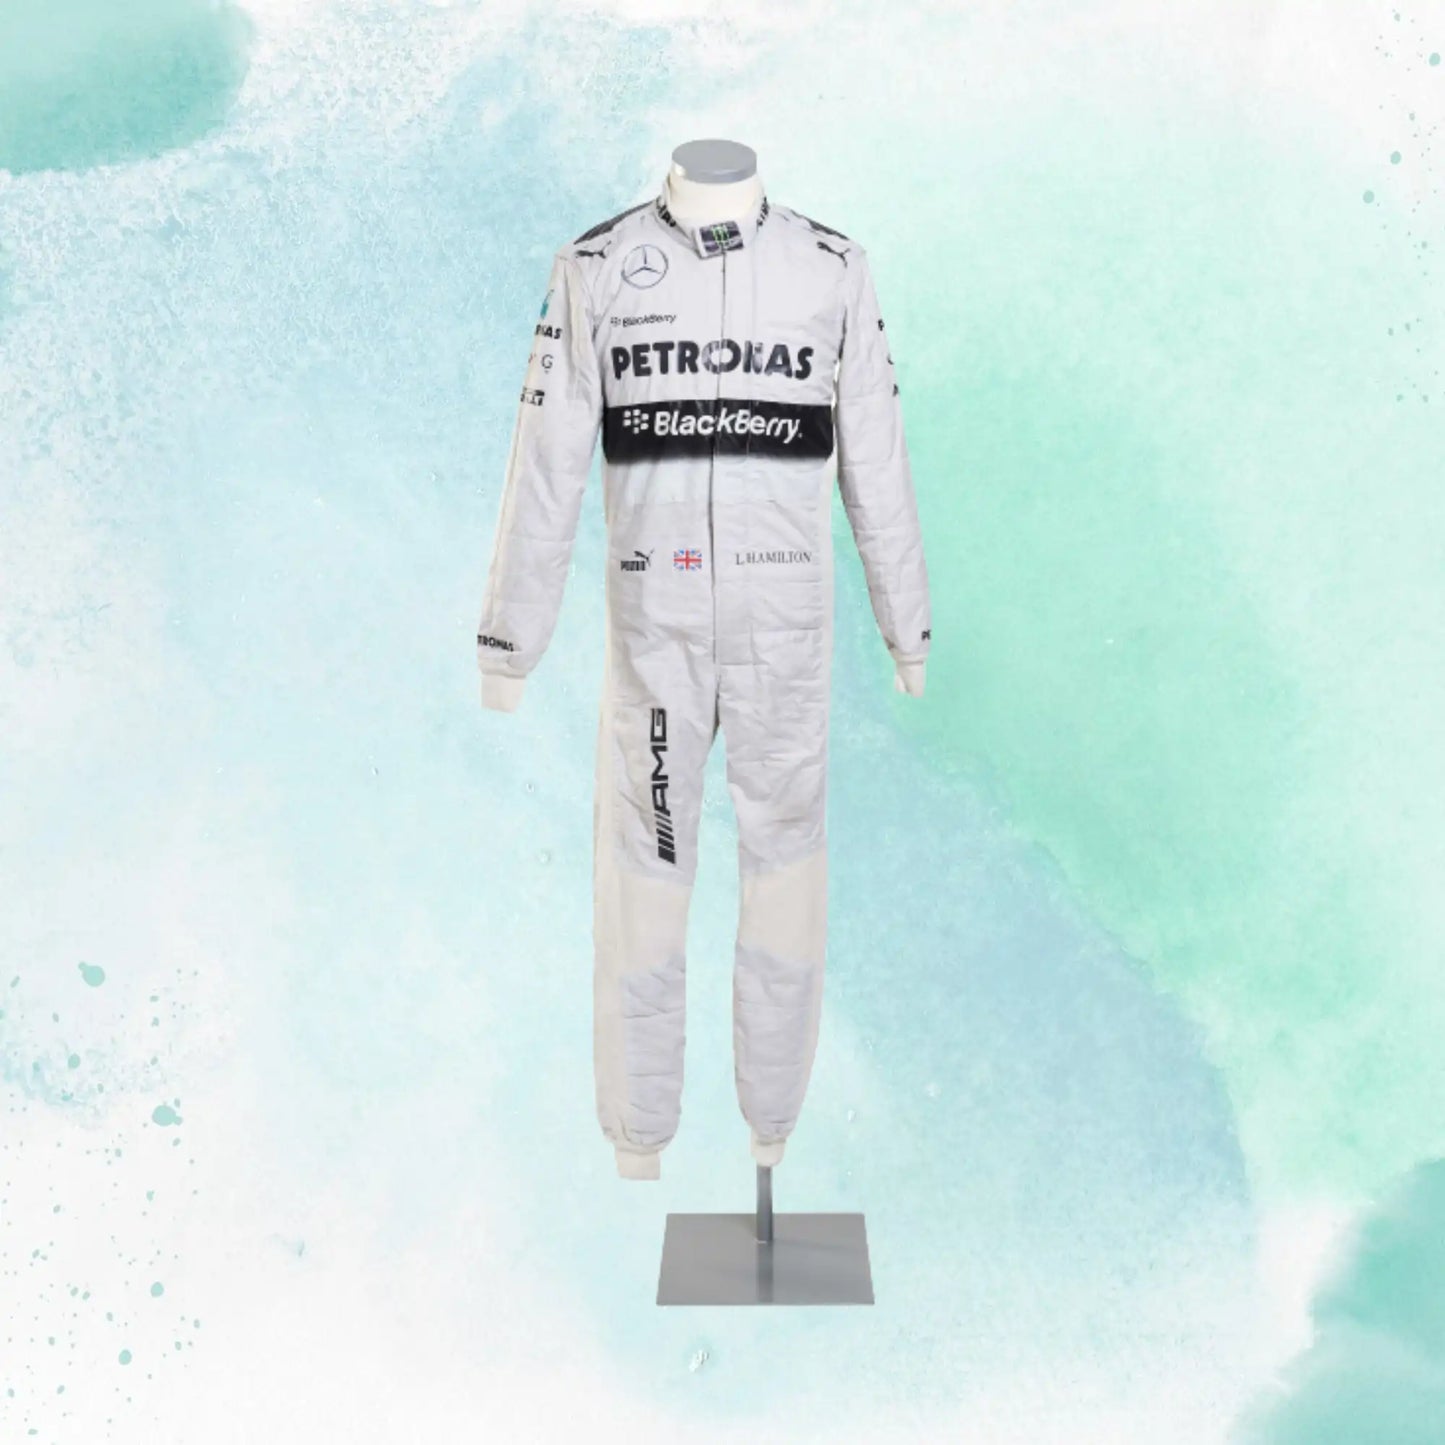 Lewis Hamilton 2015 Mercedes AMG Petronas F1 Replica Racing Suit